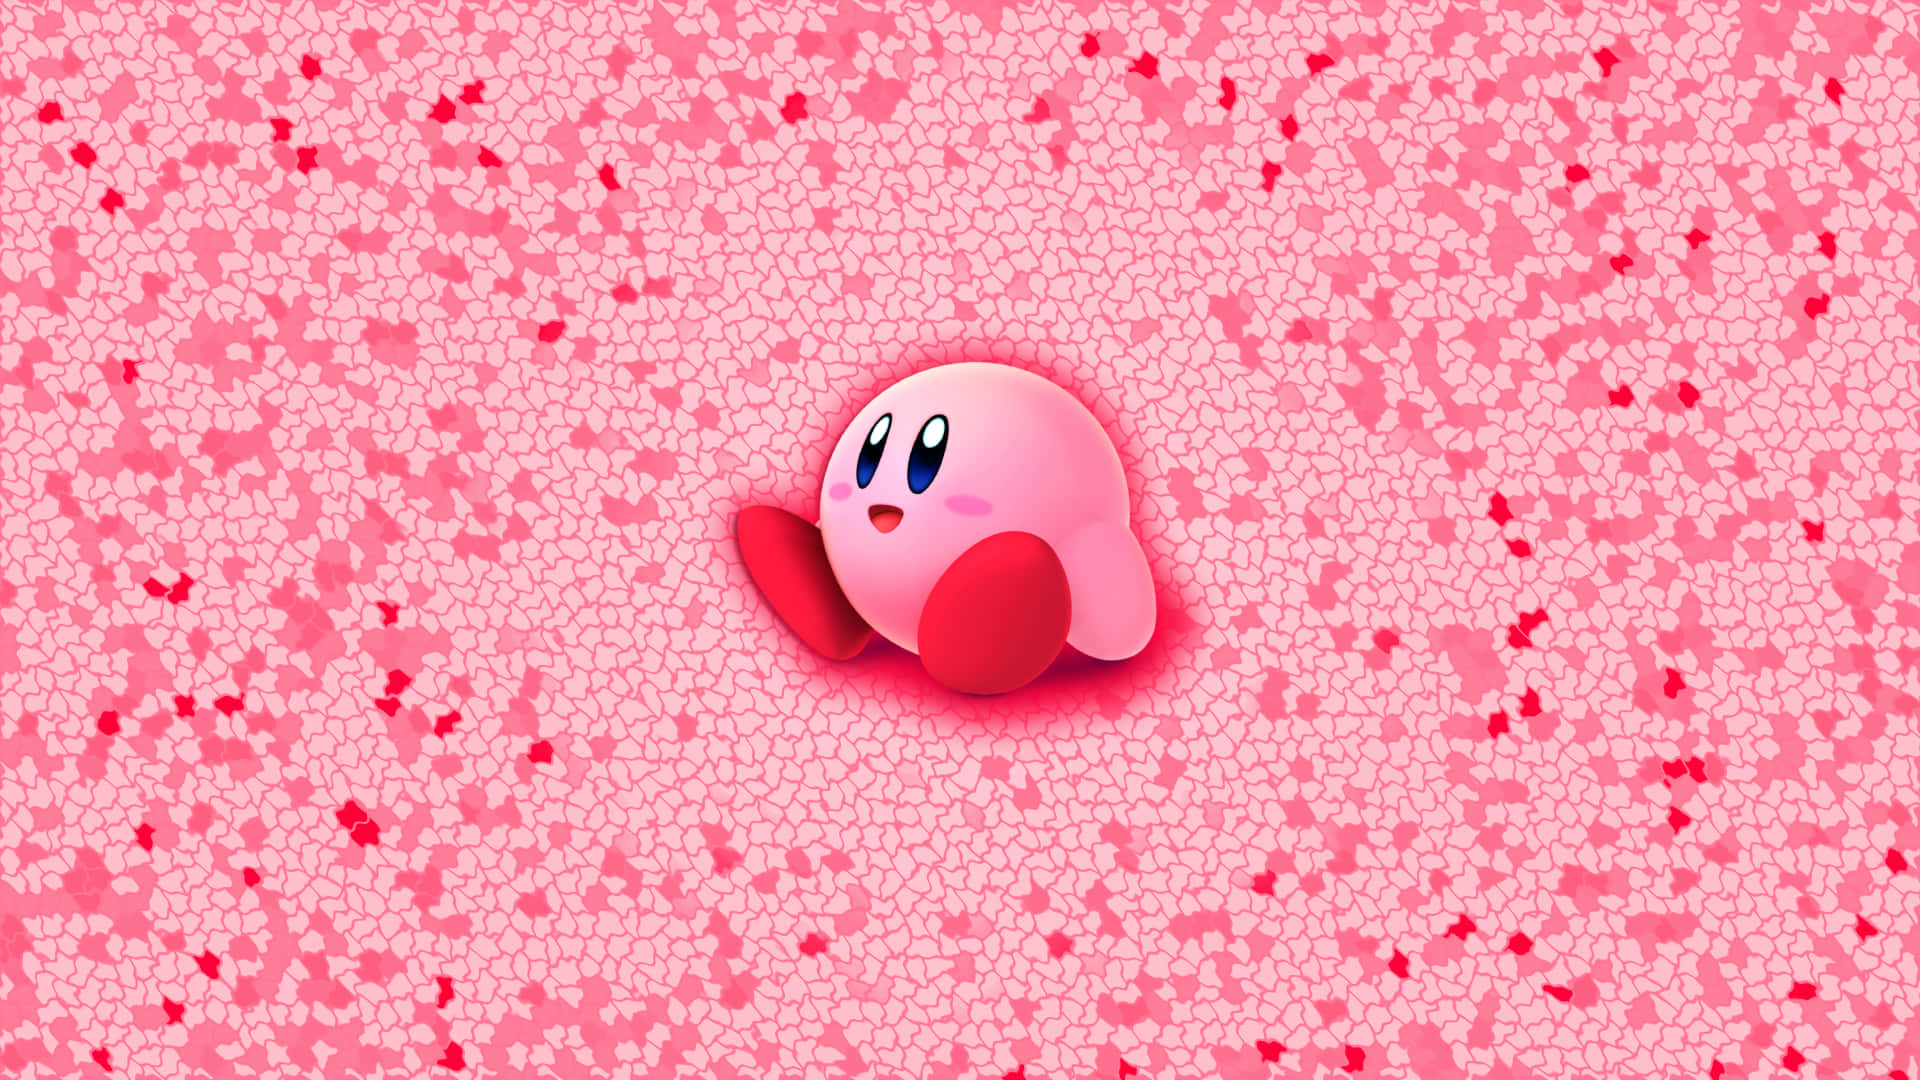 Image  A Cute, Pink Kirby Hugging a Heart Pillow